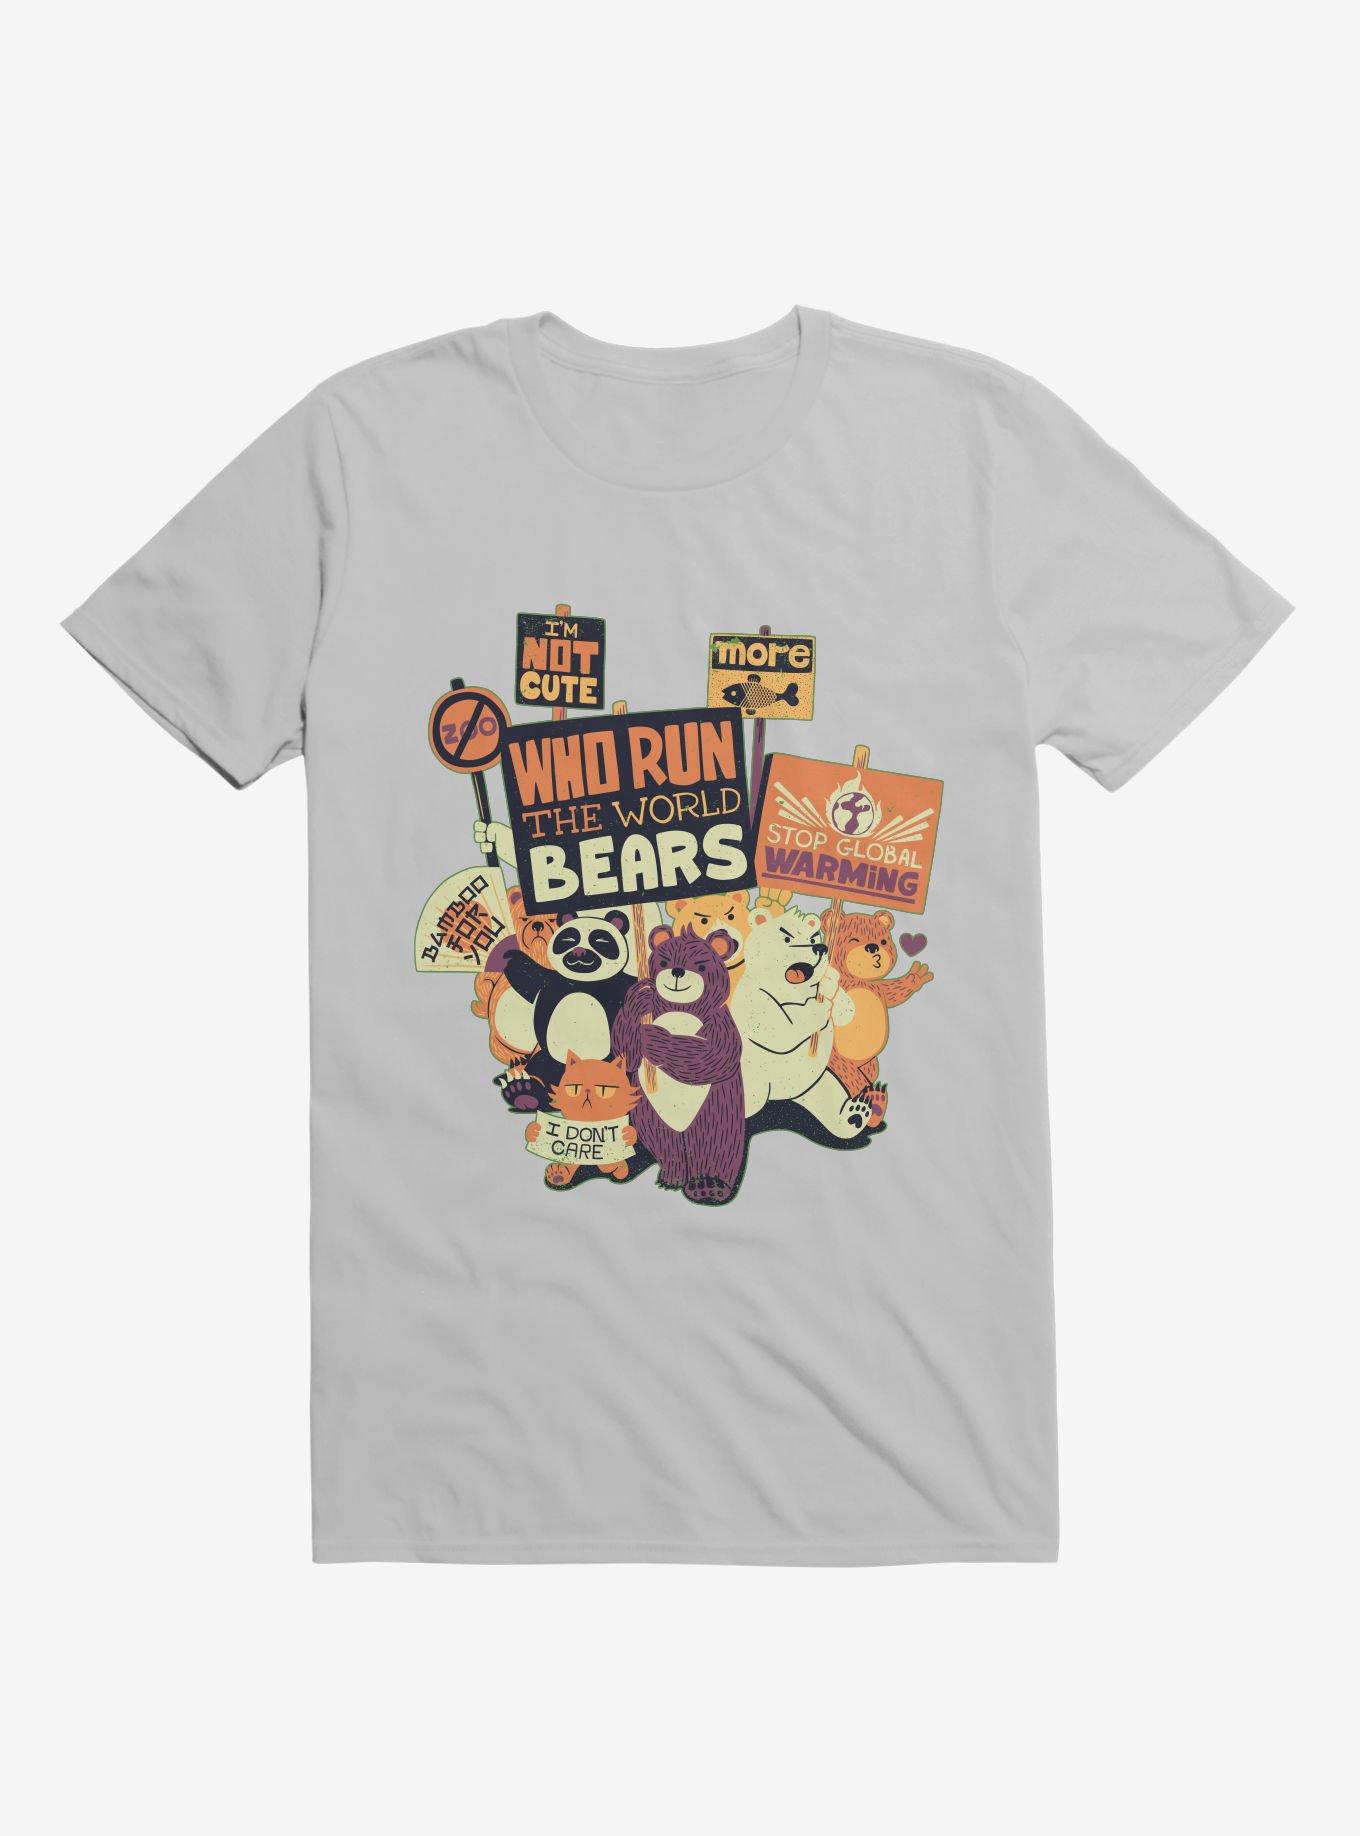 Who Run The World? Bears! T-Shirt